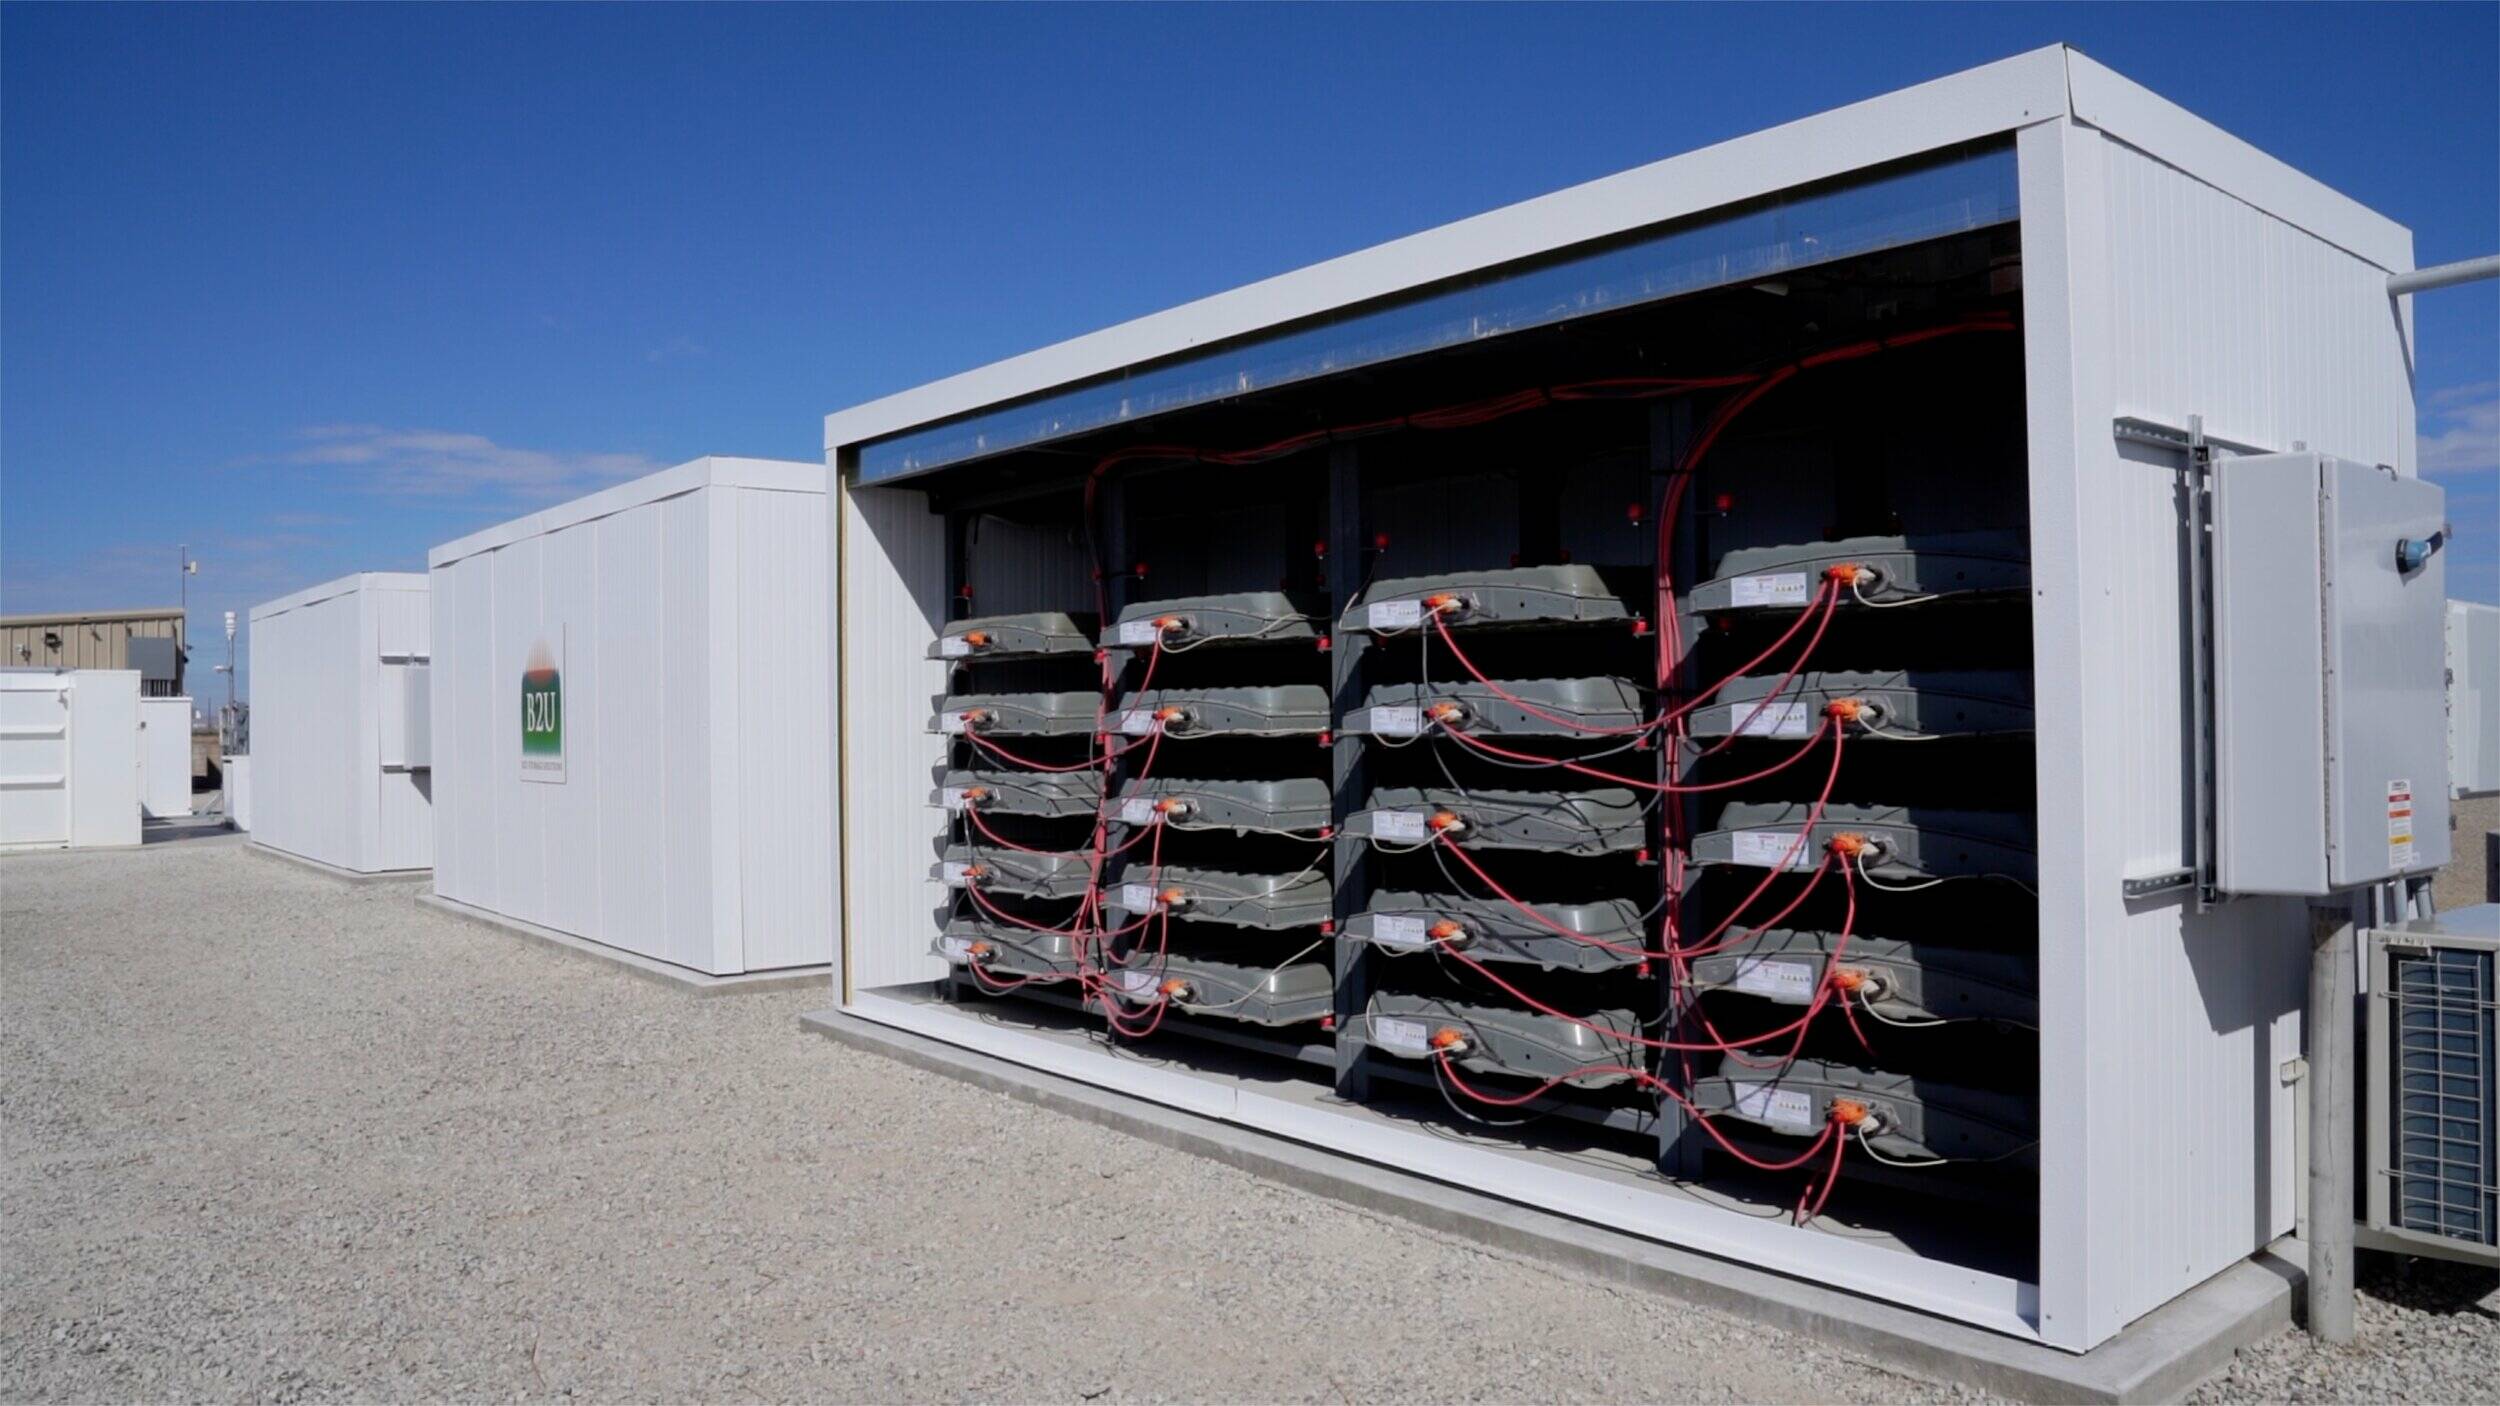 EV batteries find new life storing solar power in California • The Register